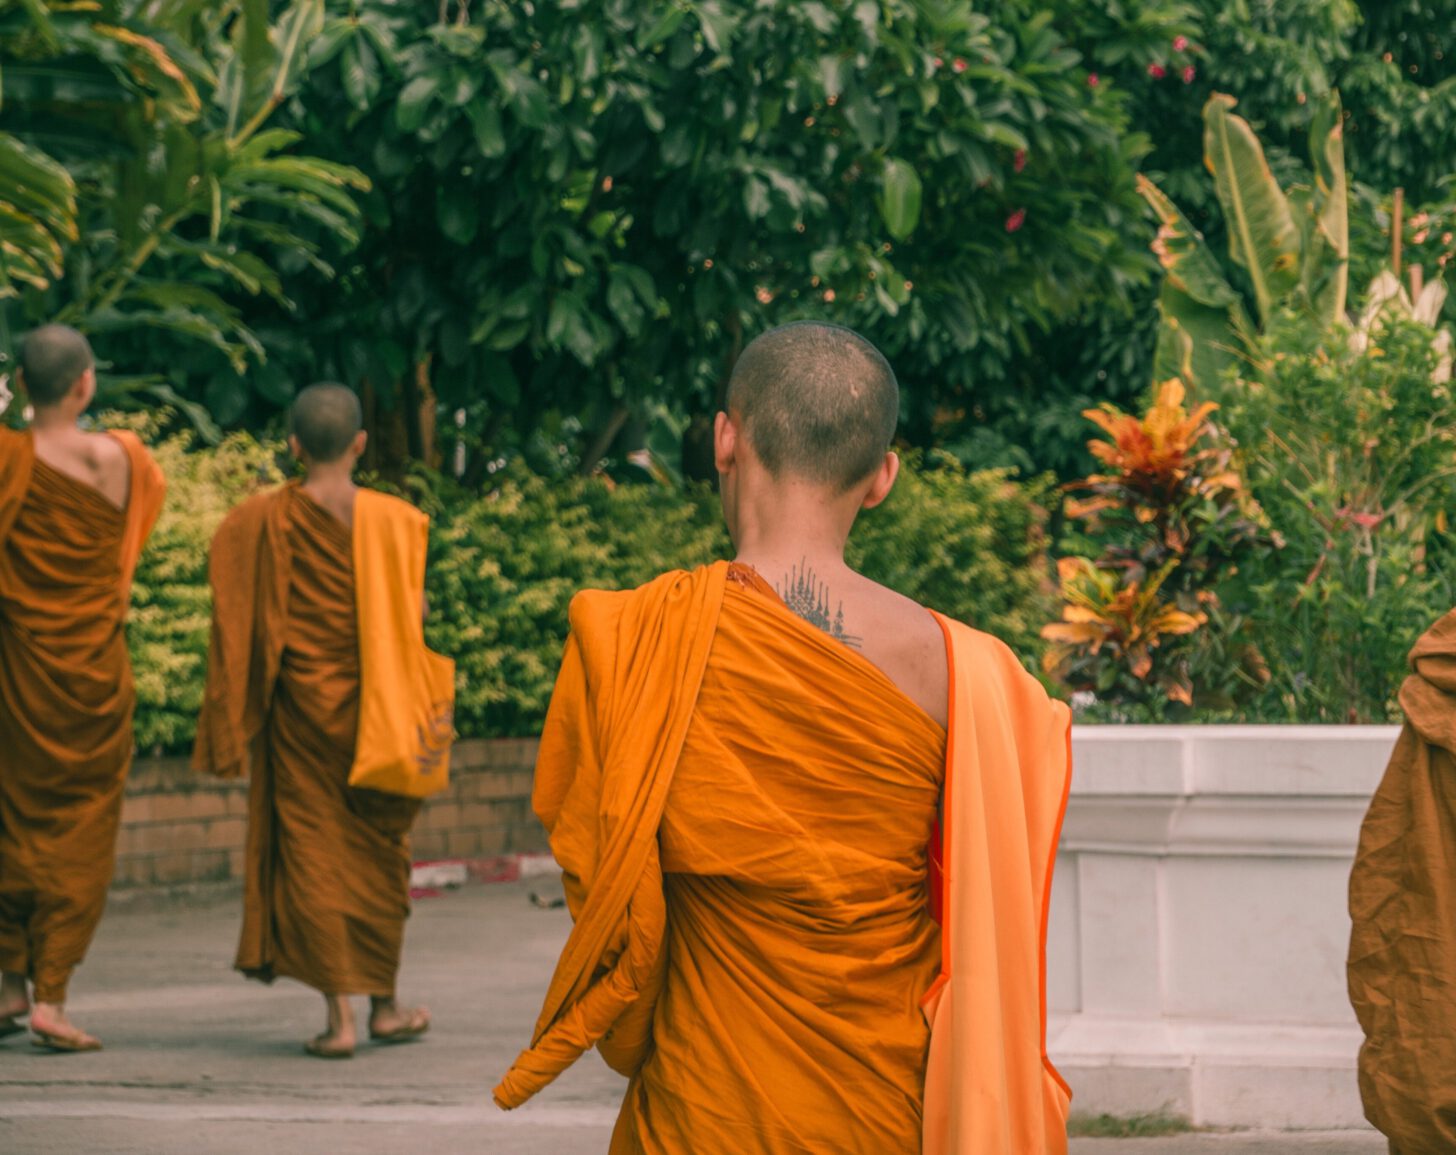 monniken lopen